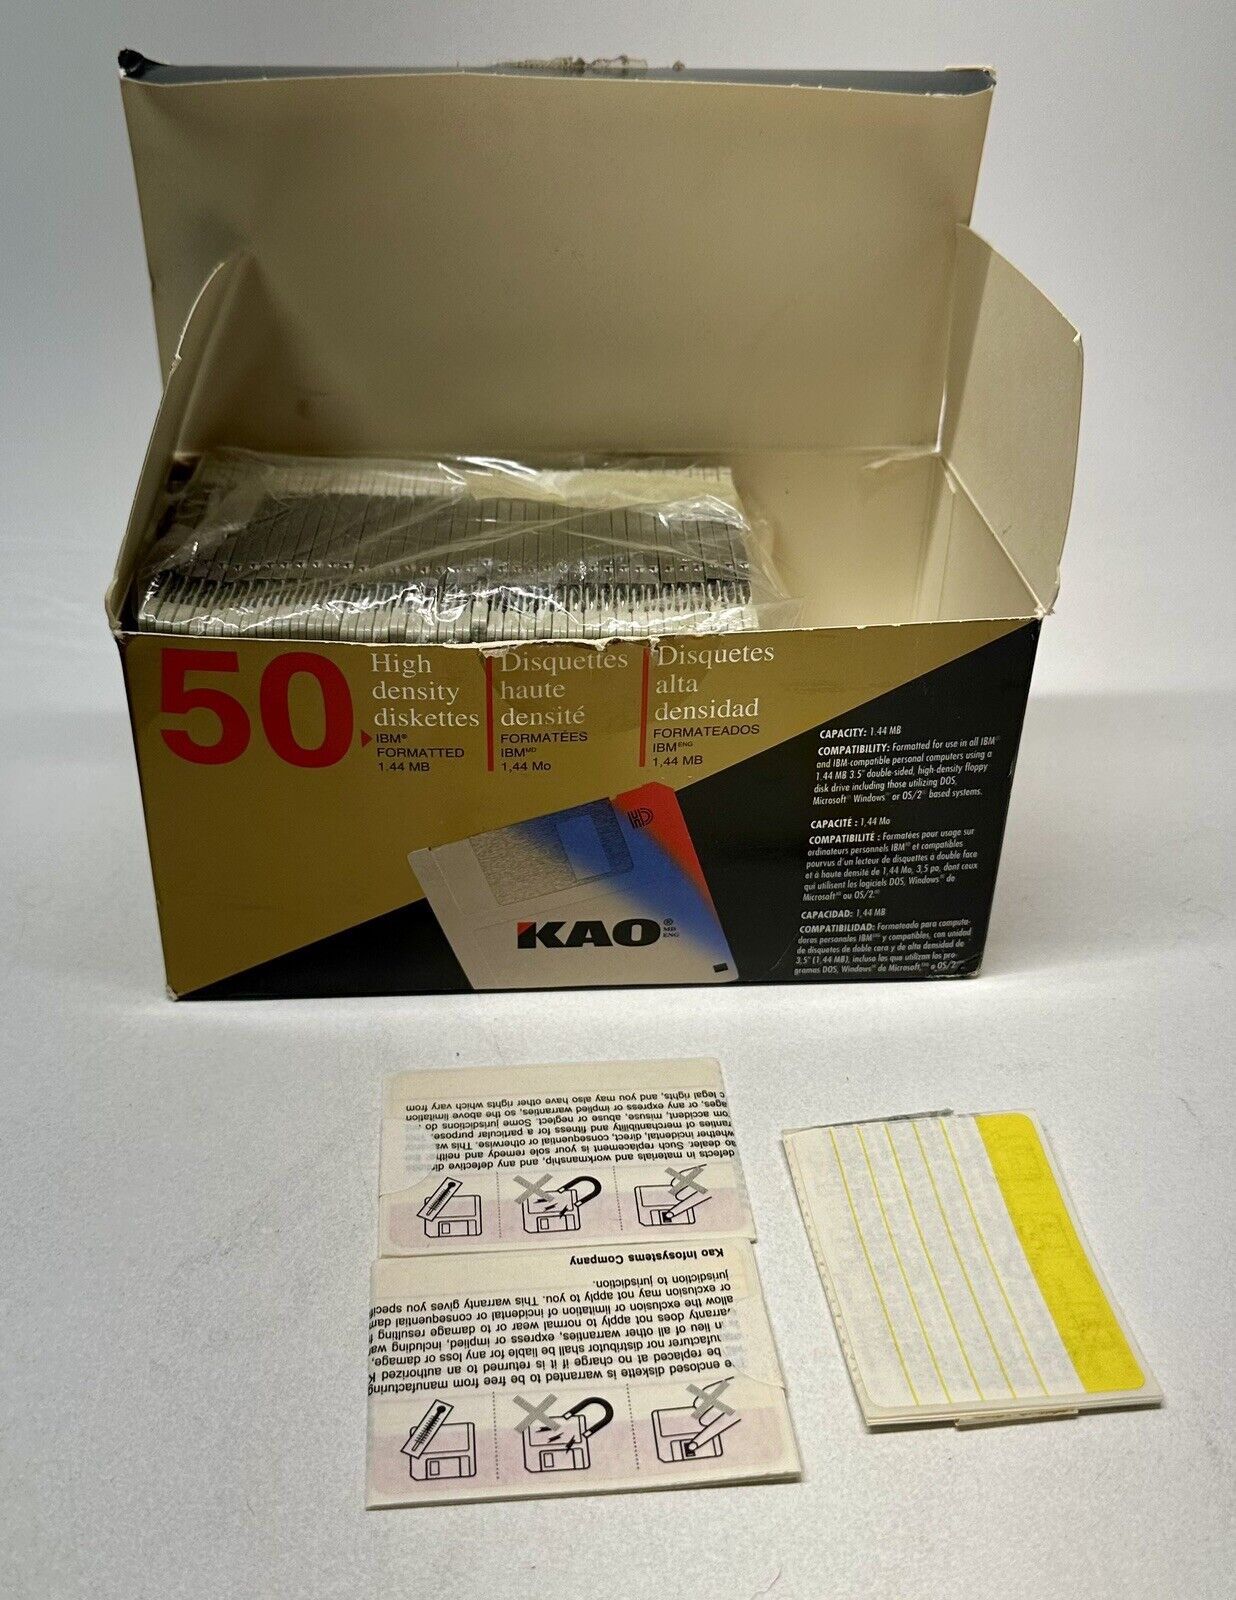 LOT of 38 KOA 3.5” High Density Diskettes IBM Formatted 1.44 MB